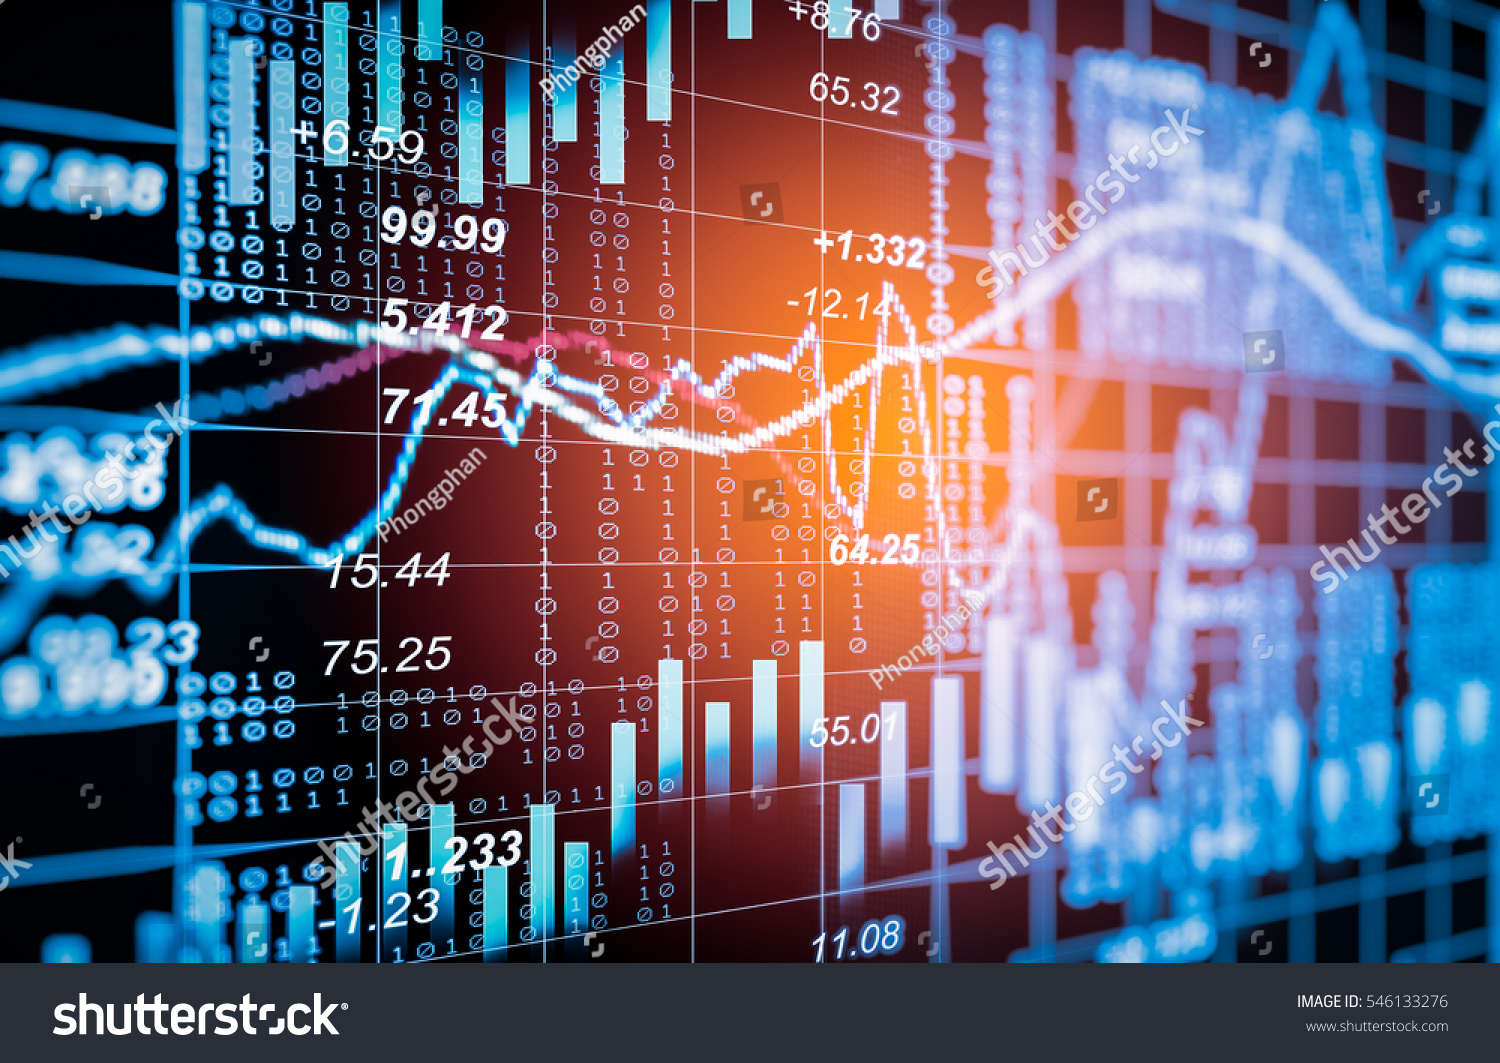 Forex trading statistics